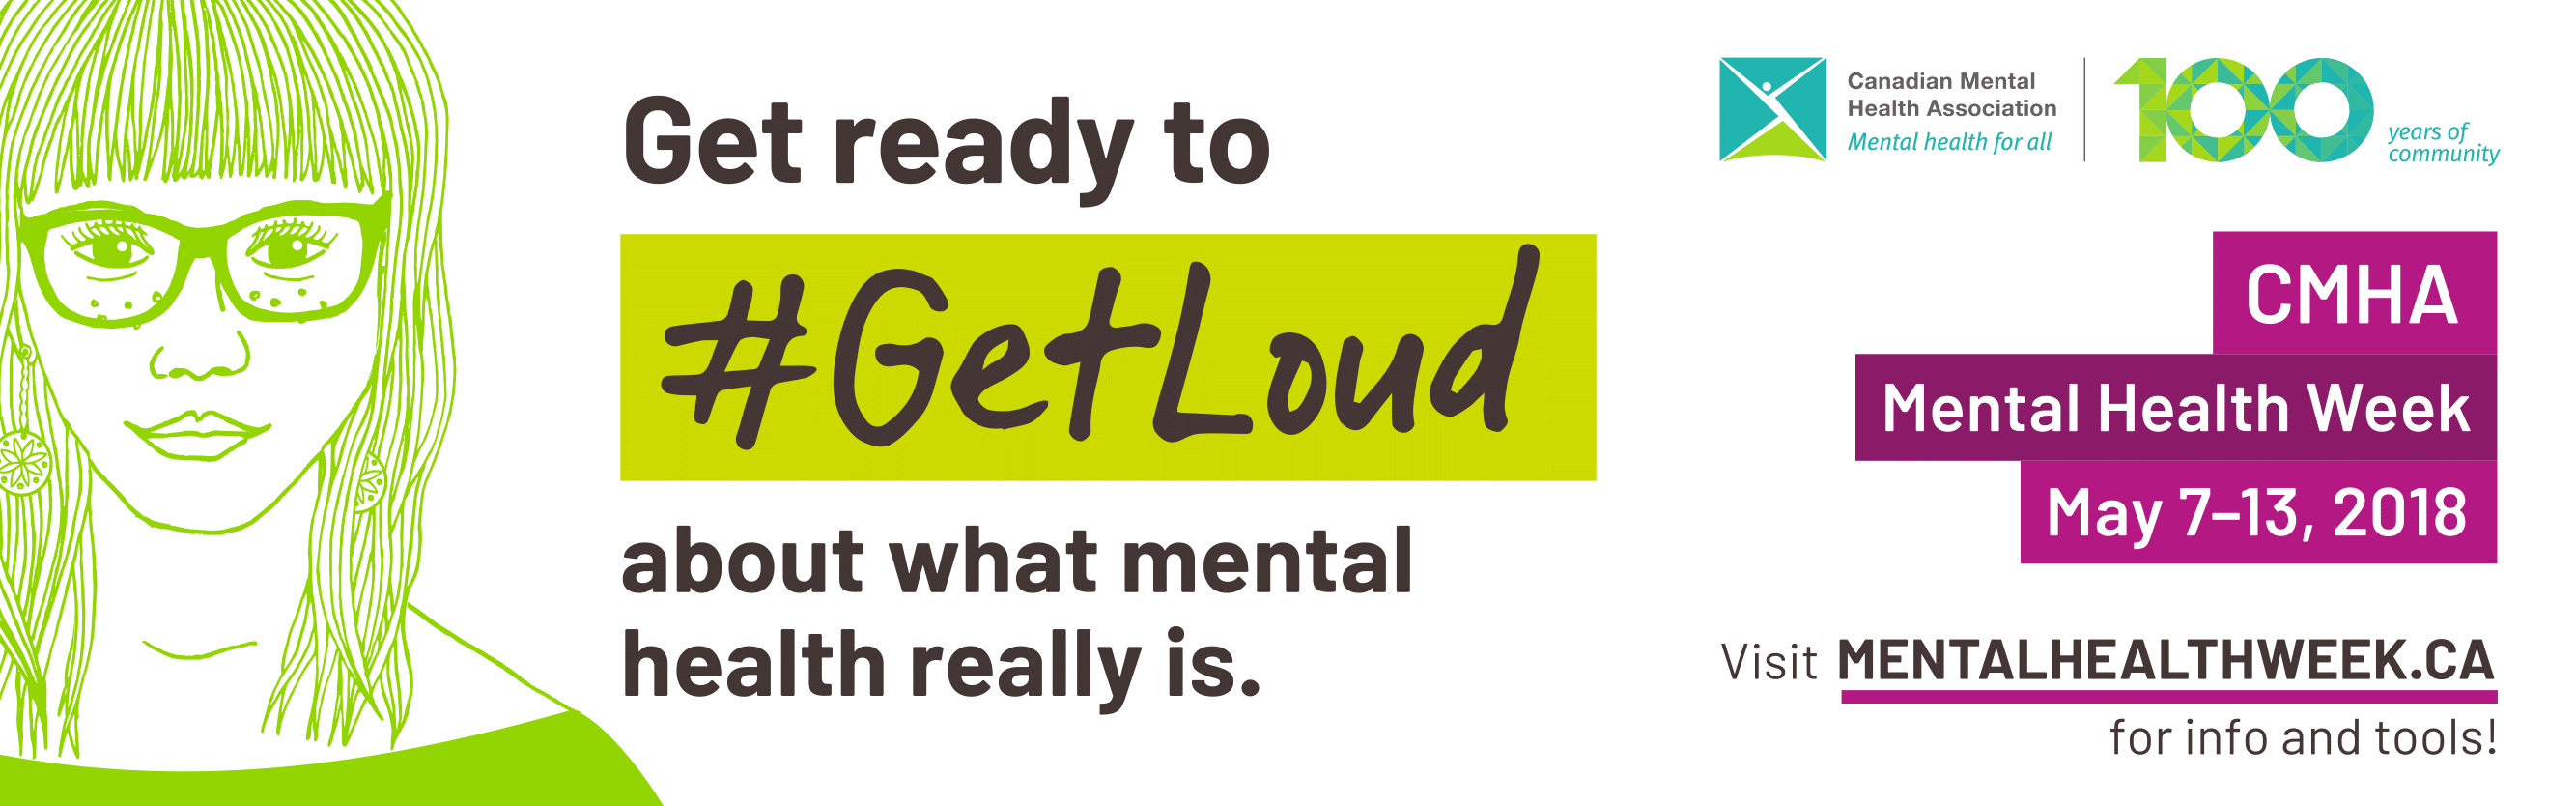 Get ready to #GetLoud for Mental Health Week - May 7-13